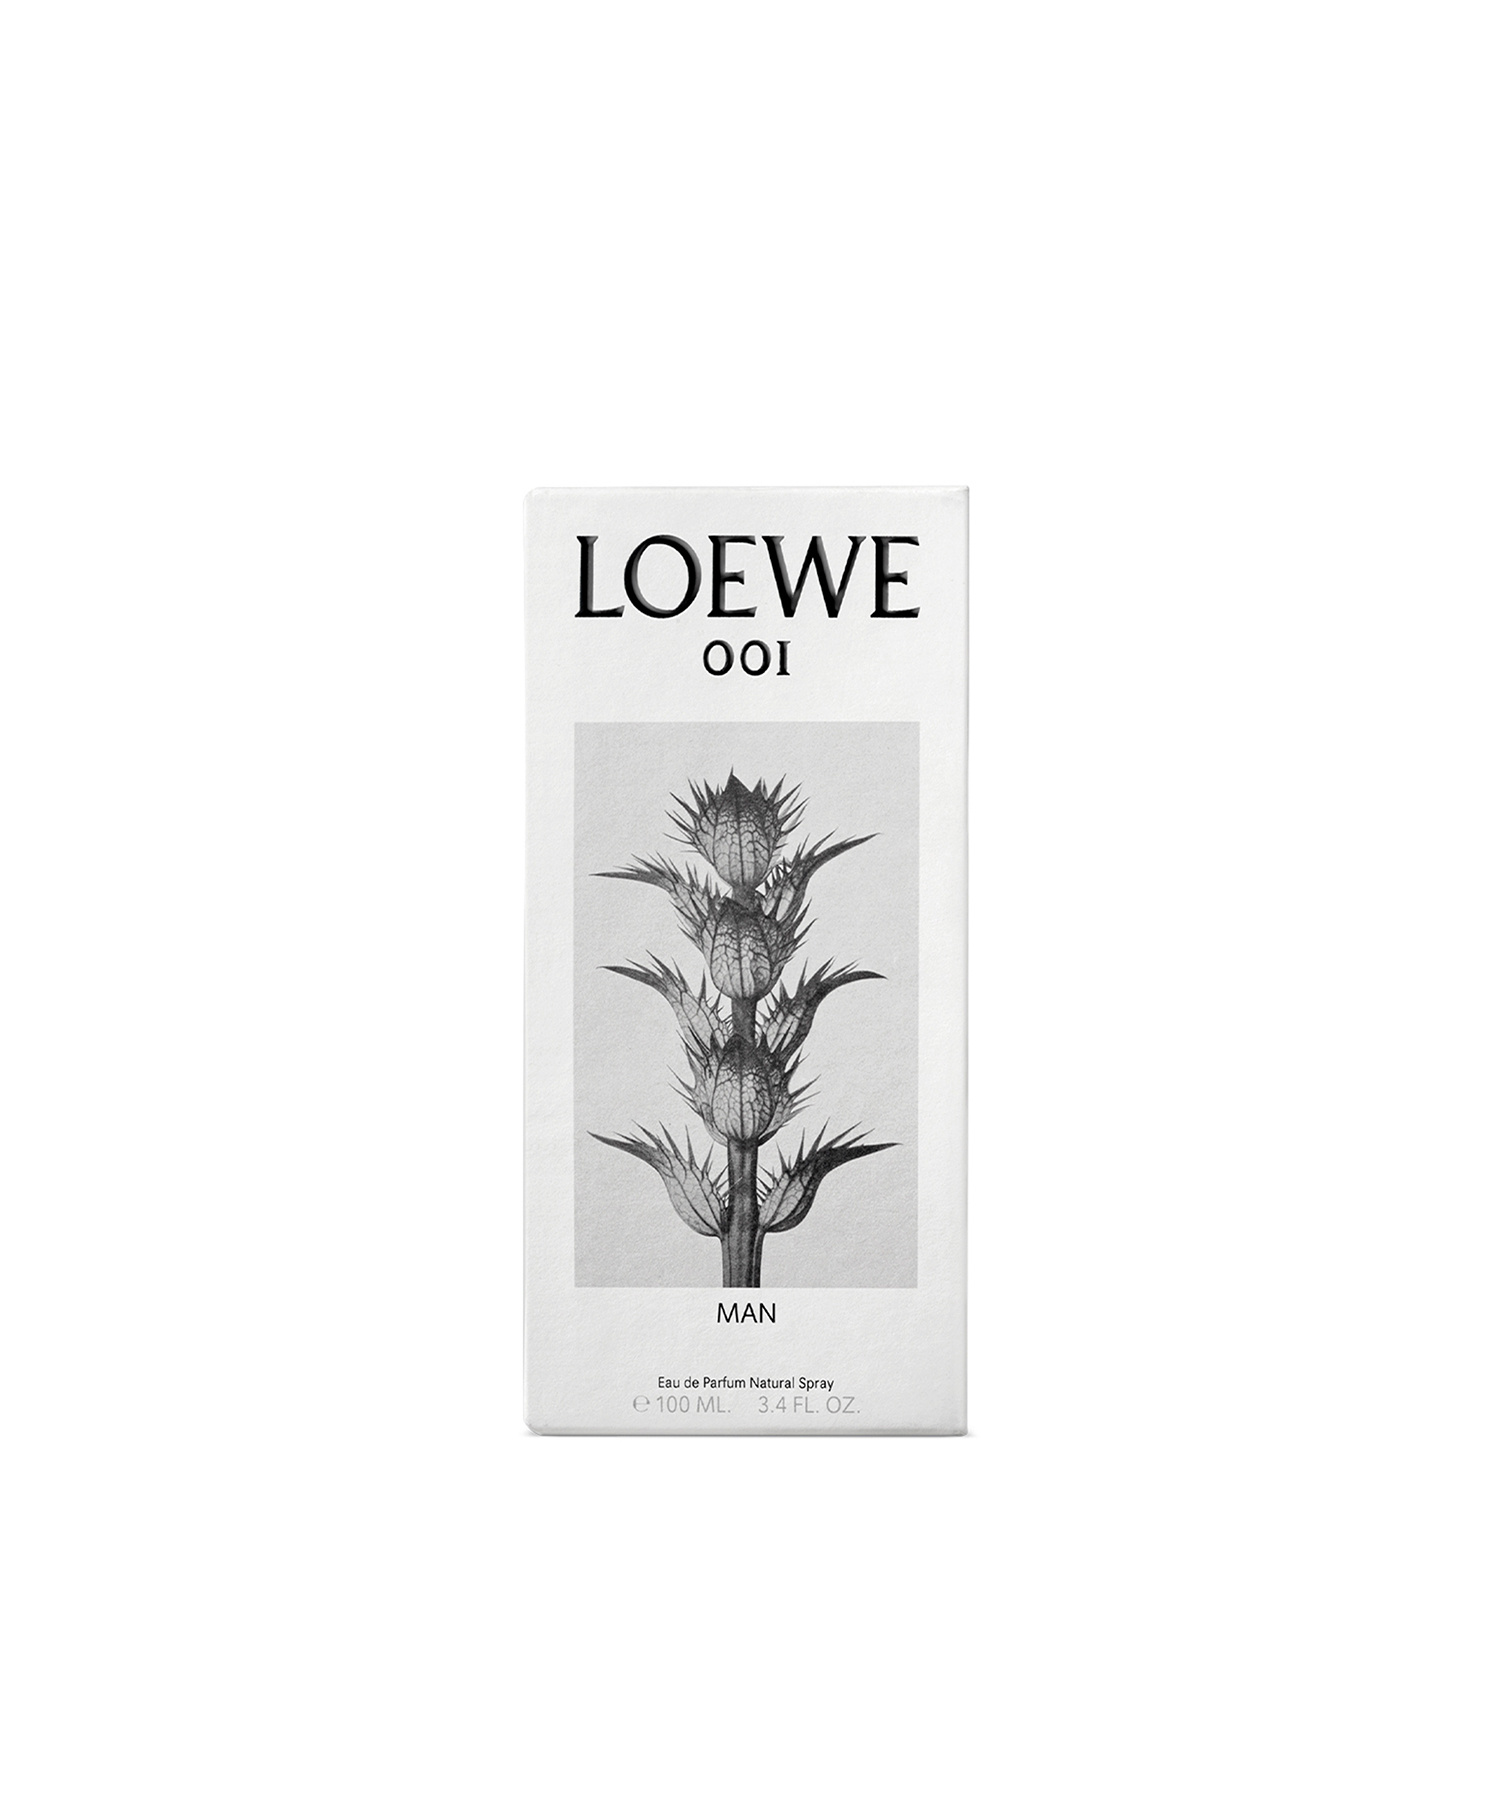 LOEWE Eau de Parfum Loewe 001 Men 100ml - Proluca Interiors